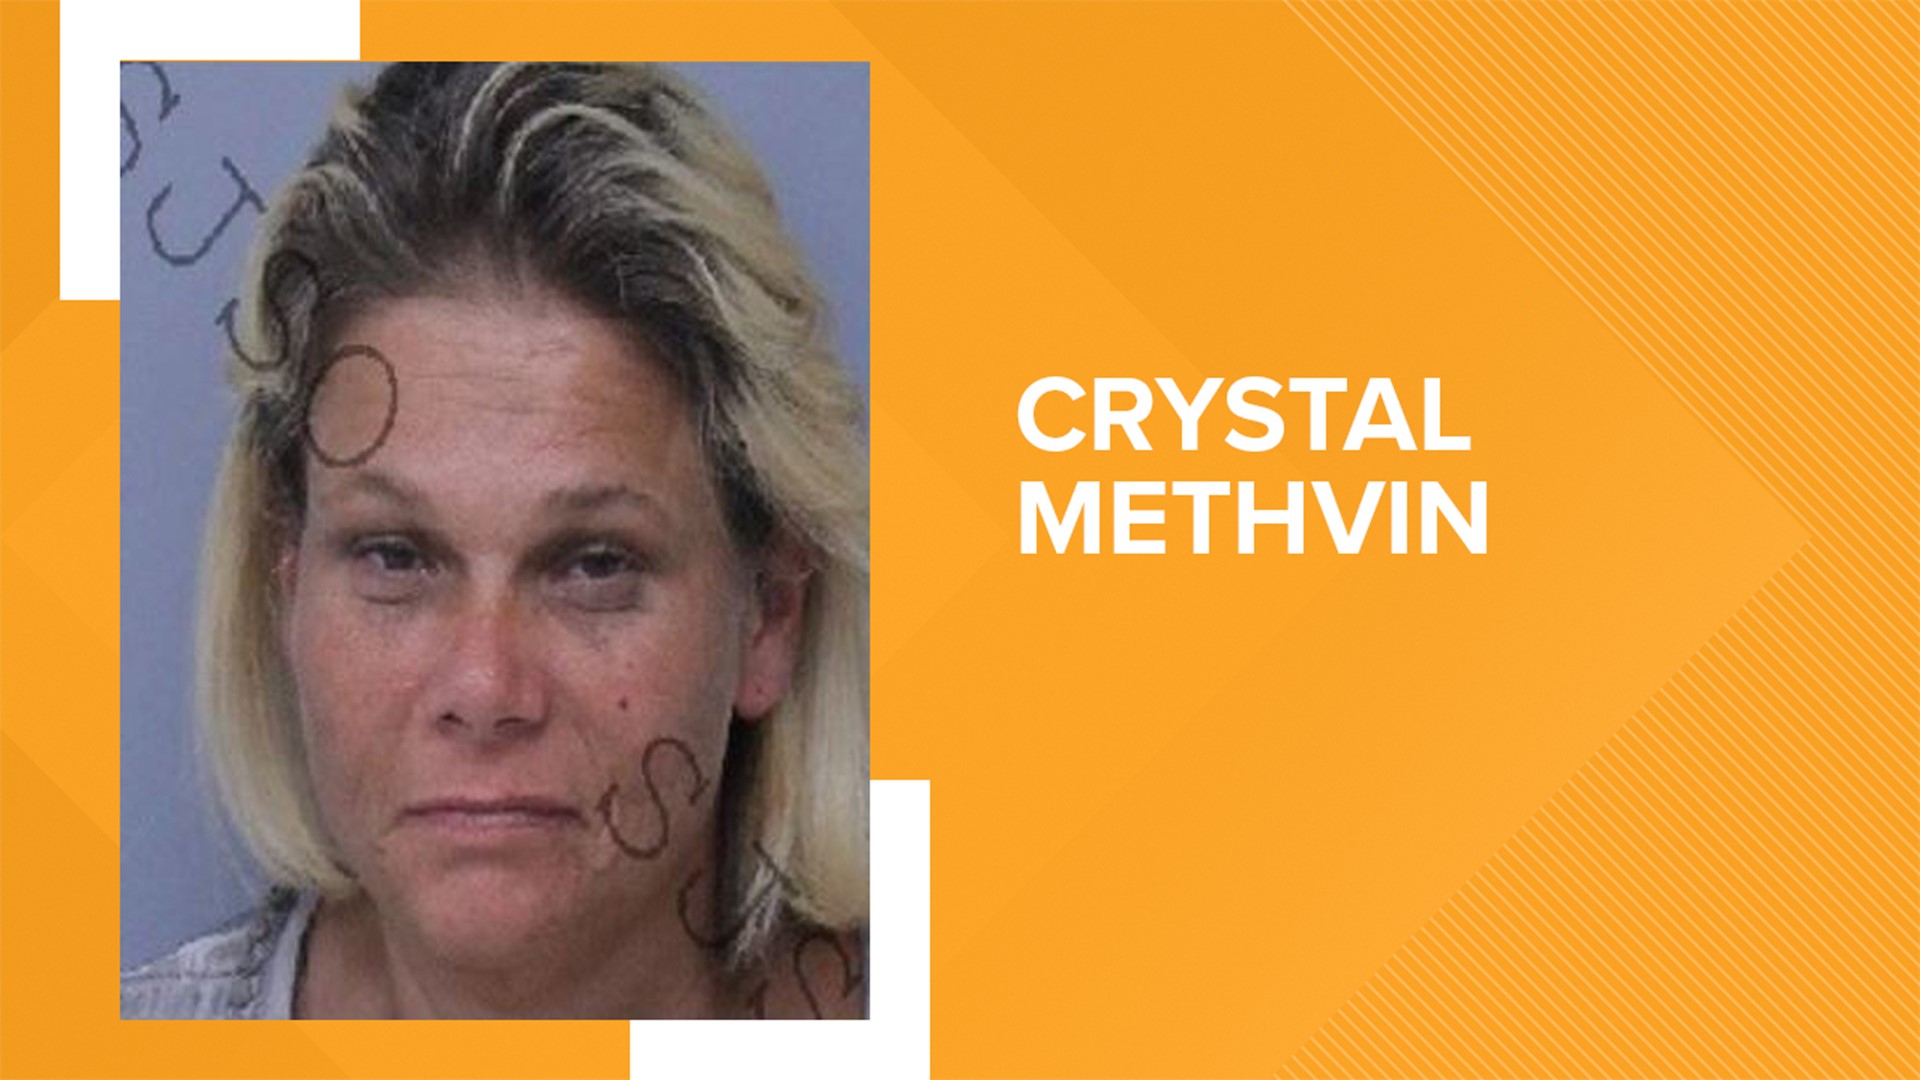 Florida Woman Named Crystal Methvin Arrested For Crystal Meth